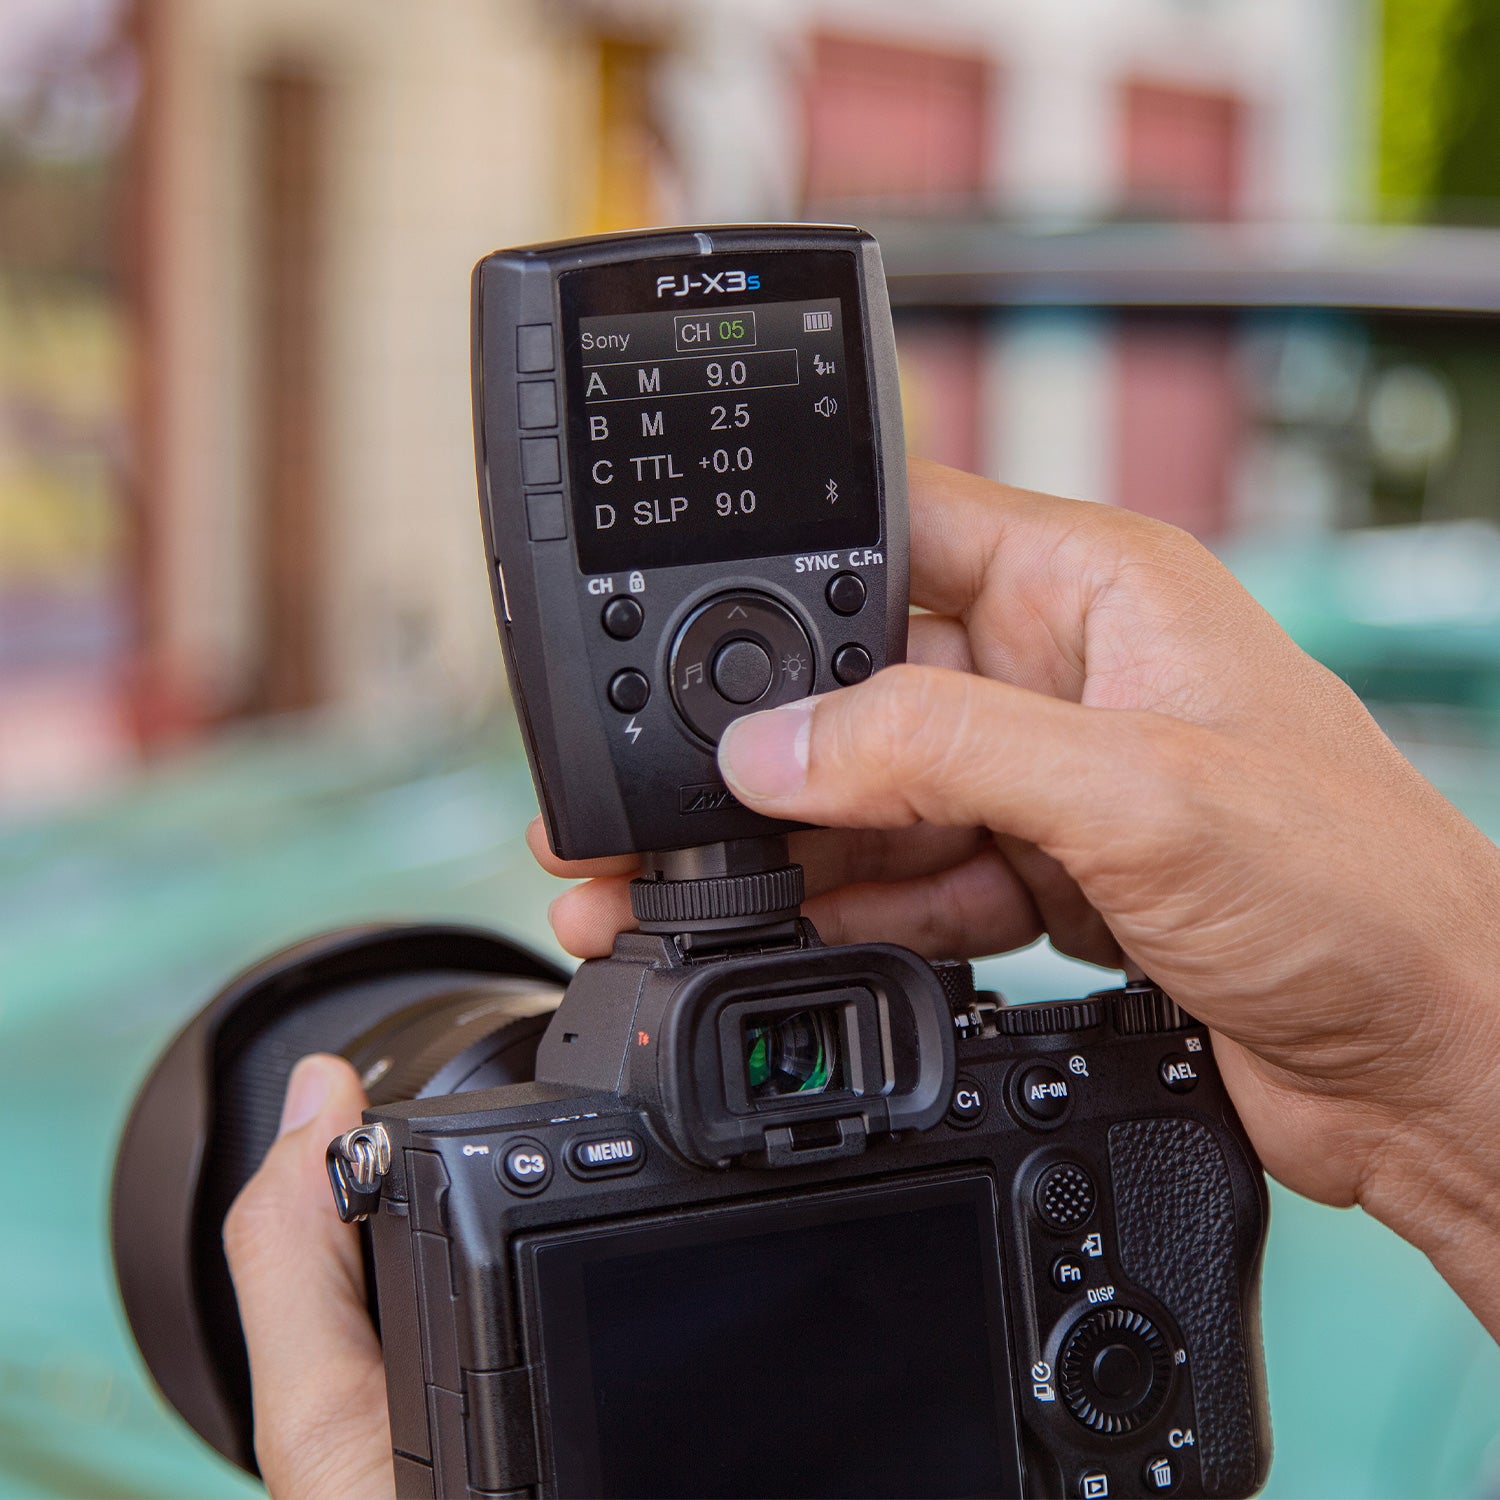 FJ-X3 S Wireless Flash Trigger for Sony Cameras